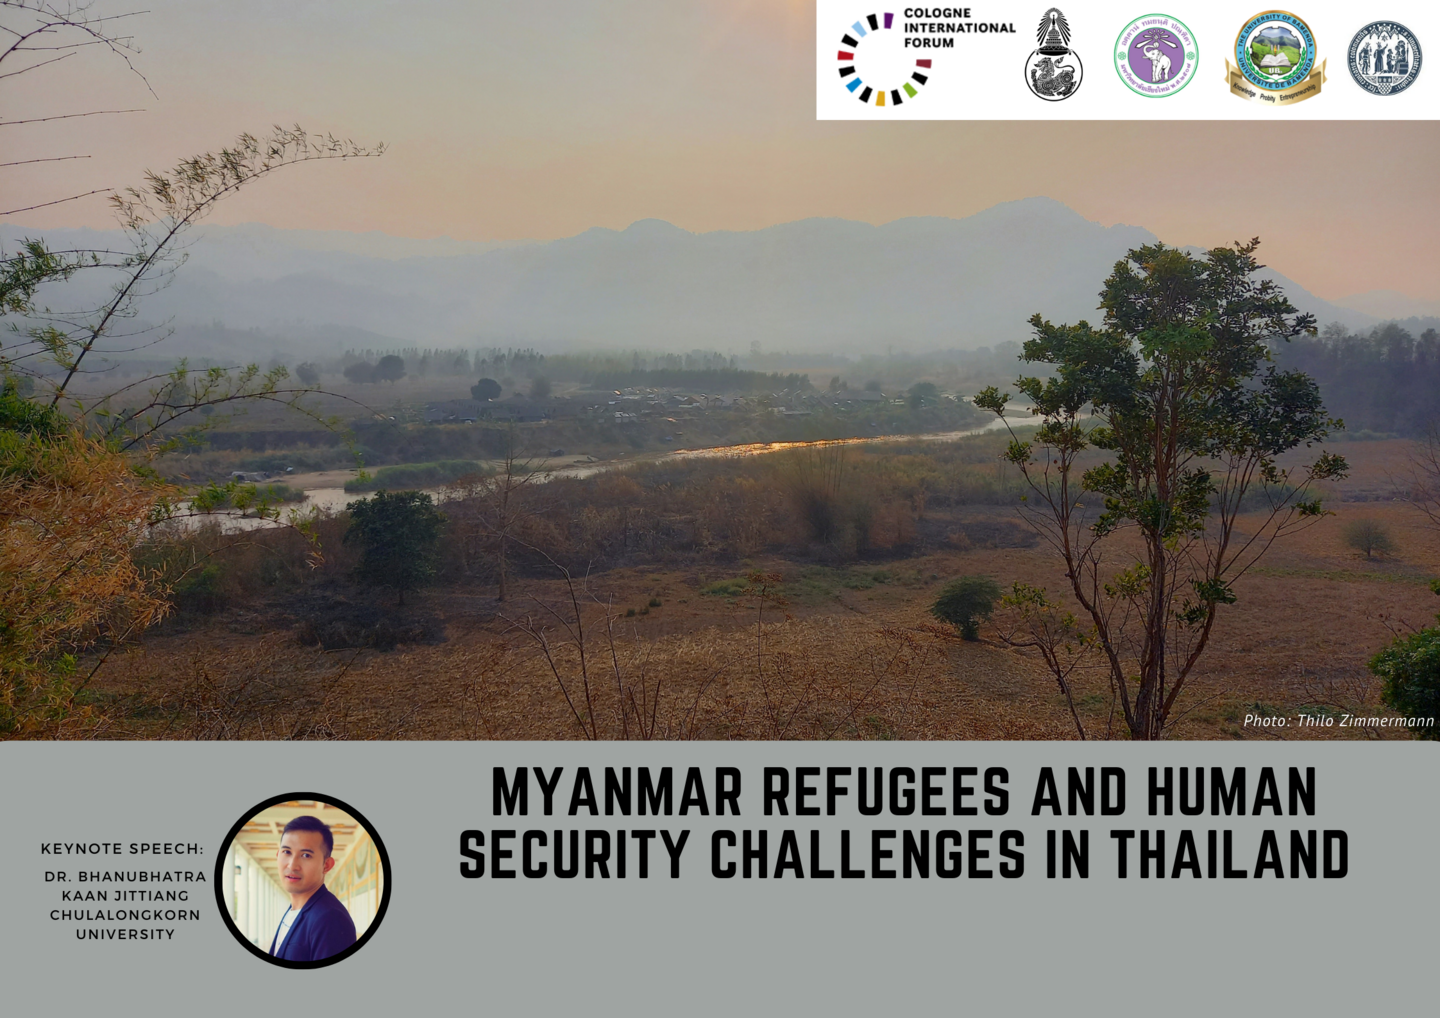 Keynote Speech: Dr. Bhanubhatara Kaan Jittiang, Chulalongkorn University. Myanmar Refugees and Human Security Challenges in Thailand